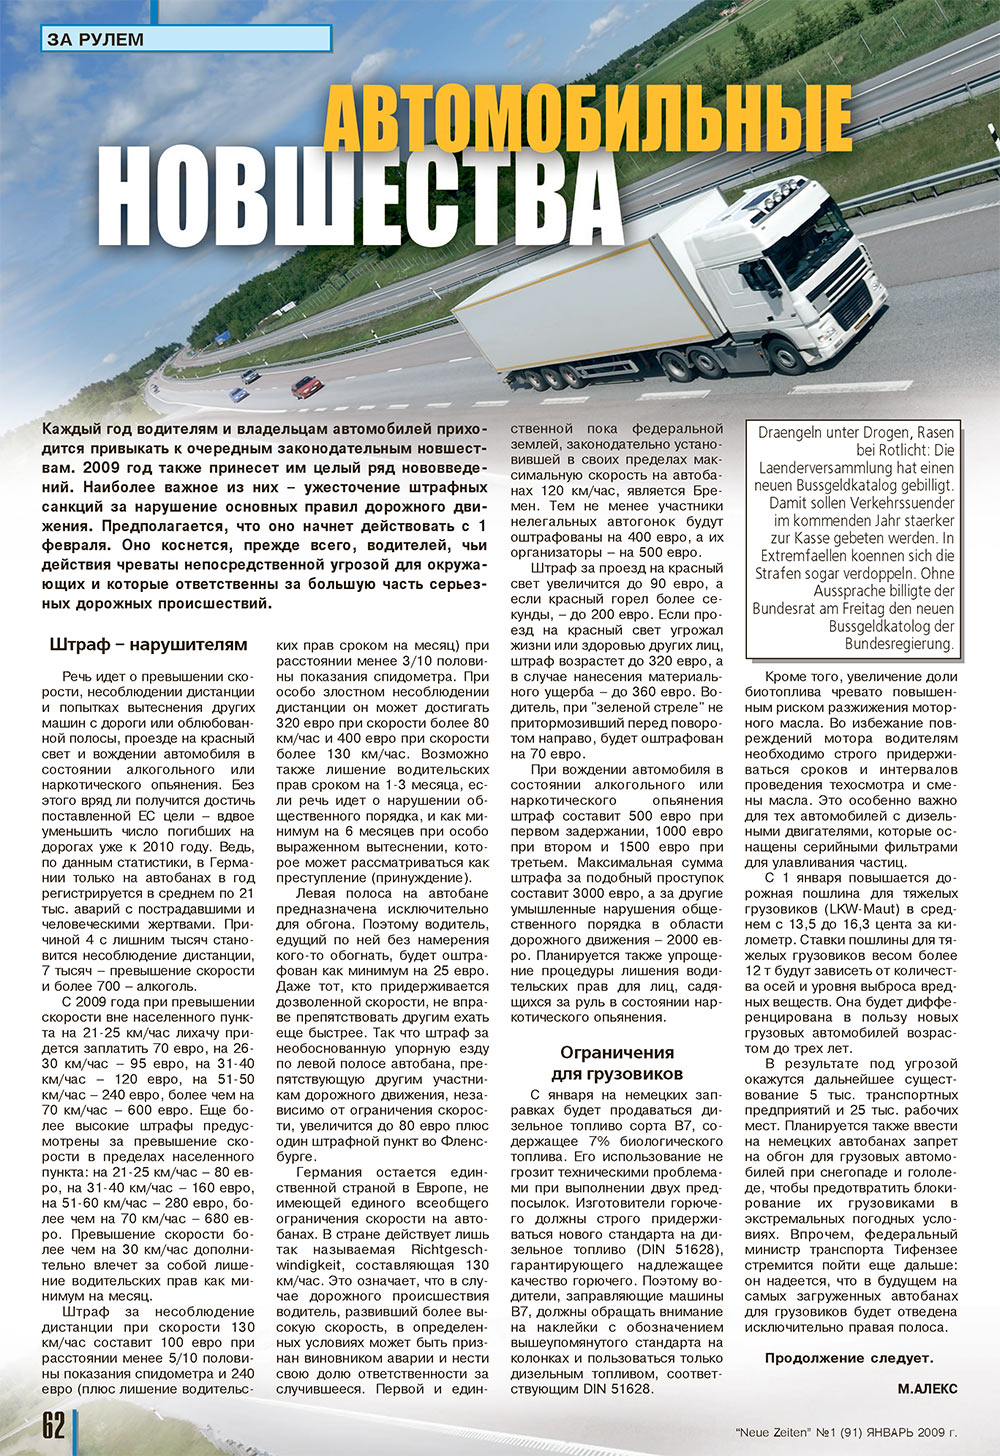 Neue Zeiten (журнал). 2009 год, номер 1, стр. 62